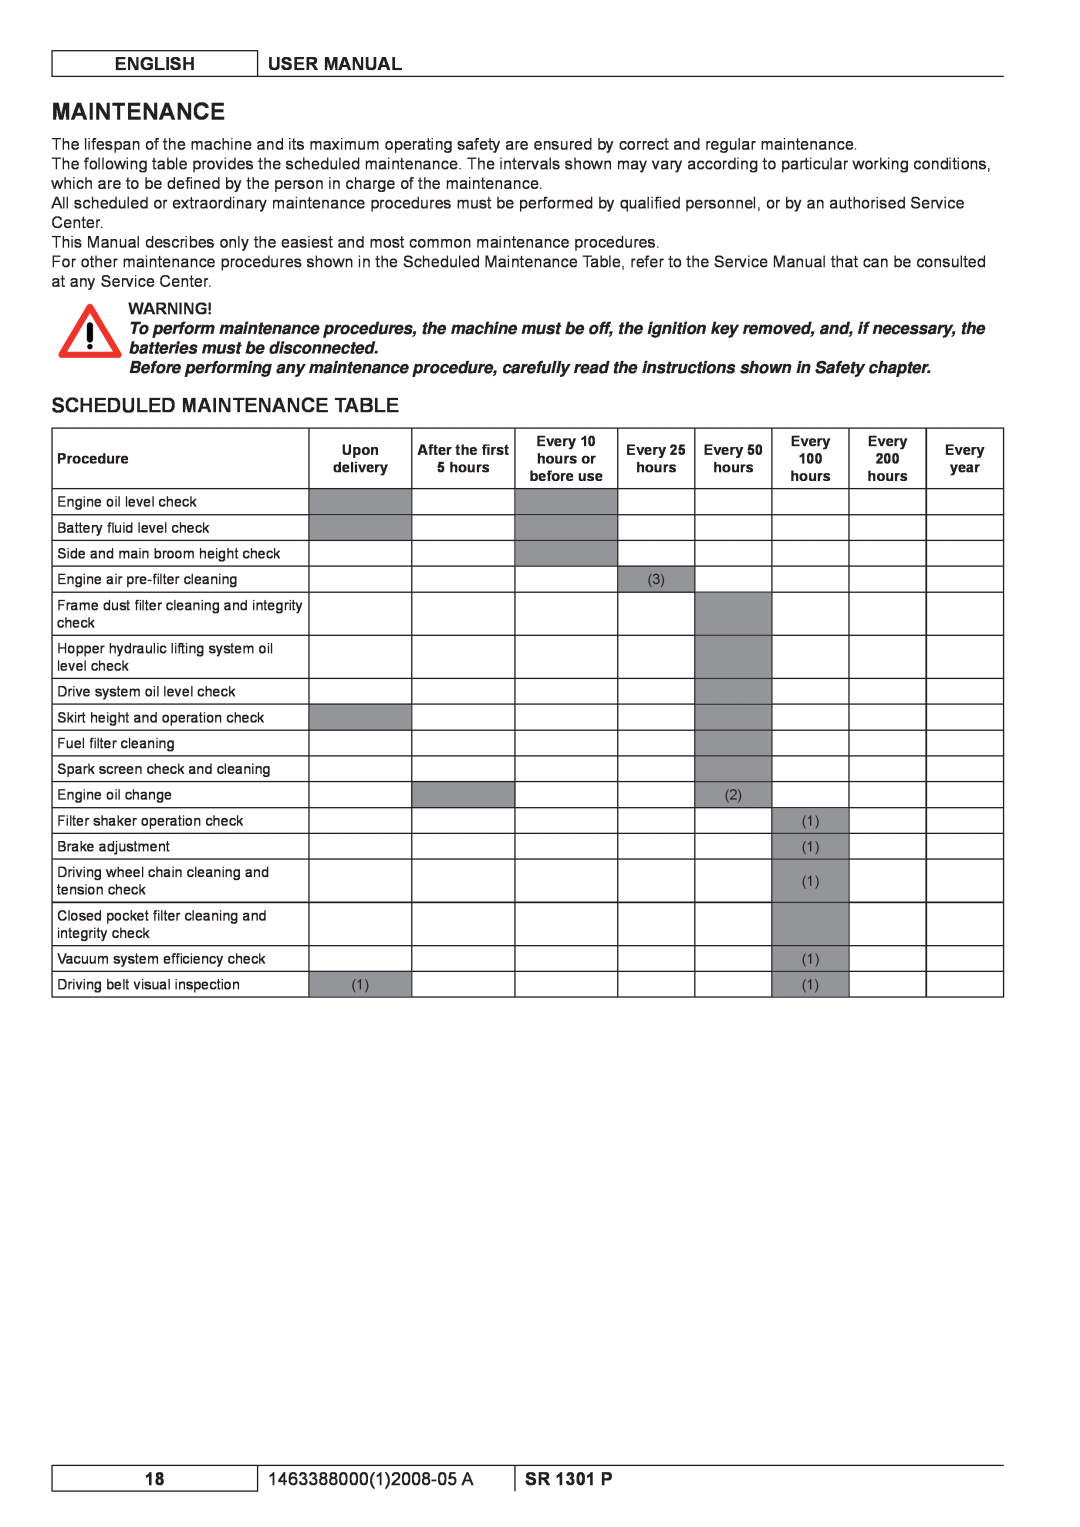 Nilfisk-ALTO SR 1301 P manuel dutilisation Scheduled Maintenance Table, English, User Manual, 146338800012008-05 A 